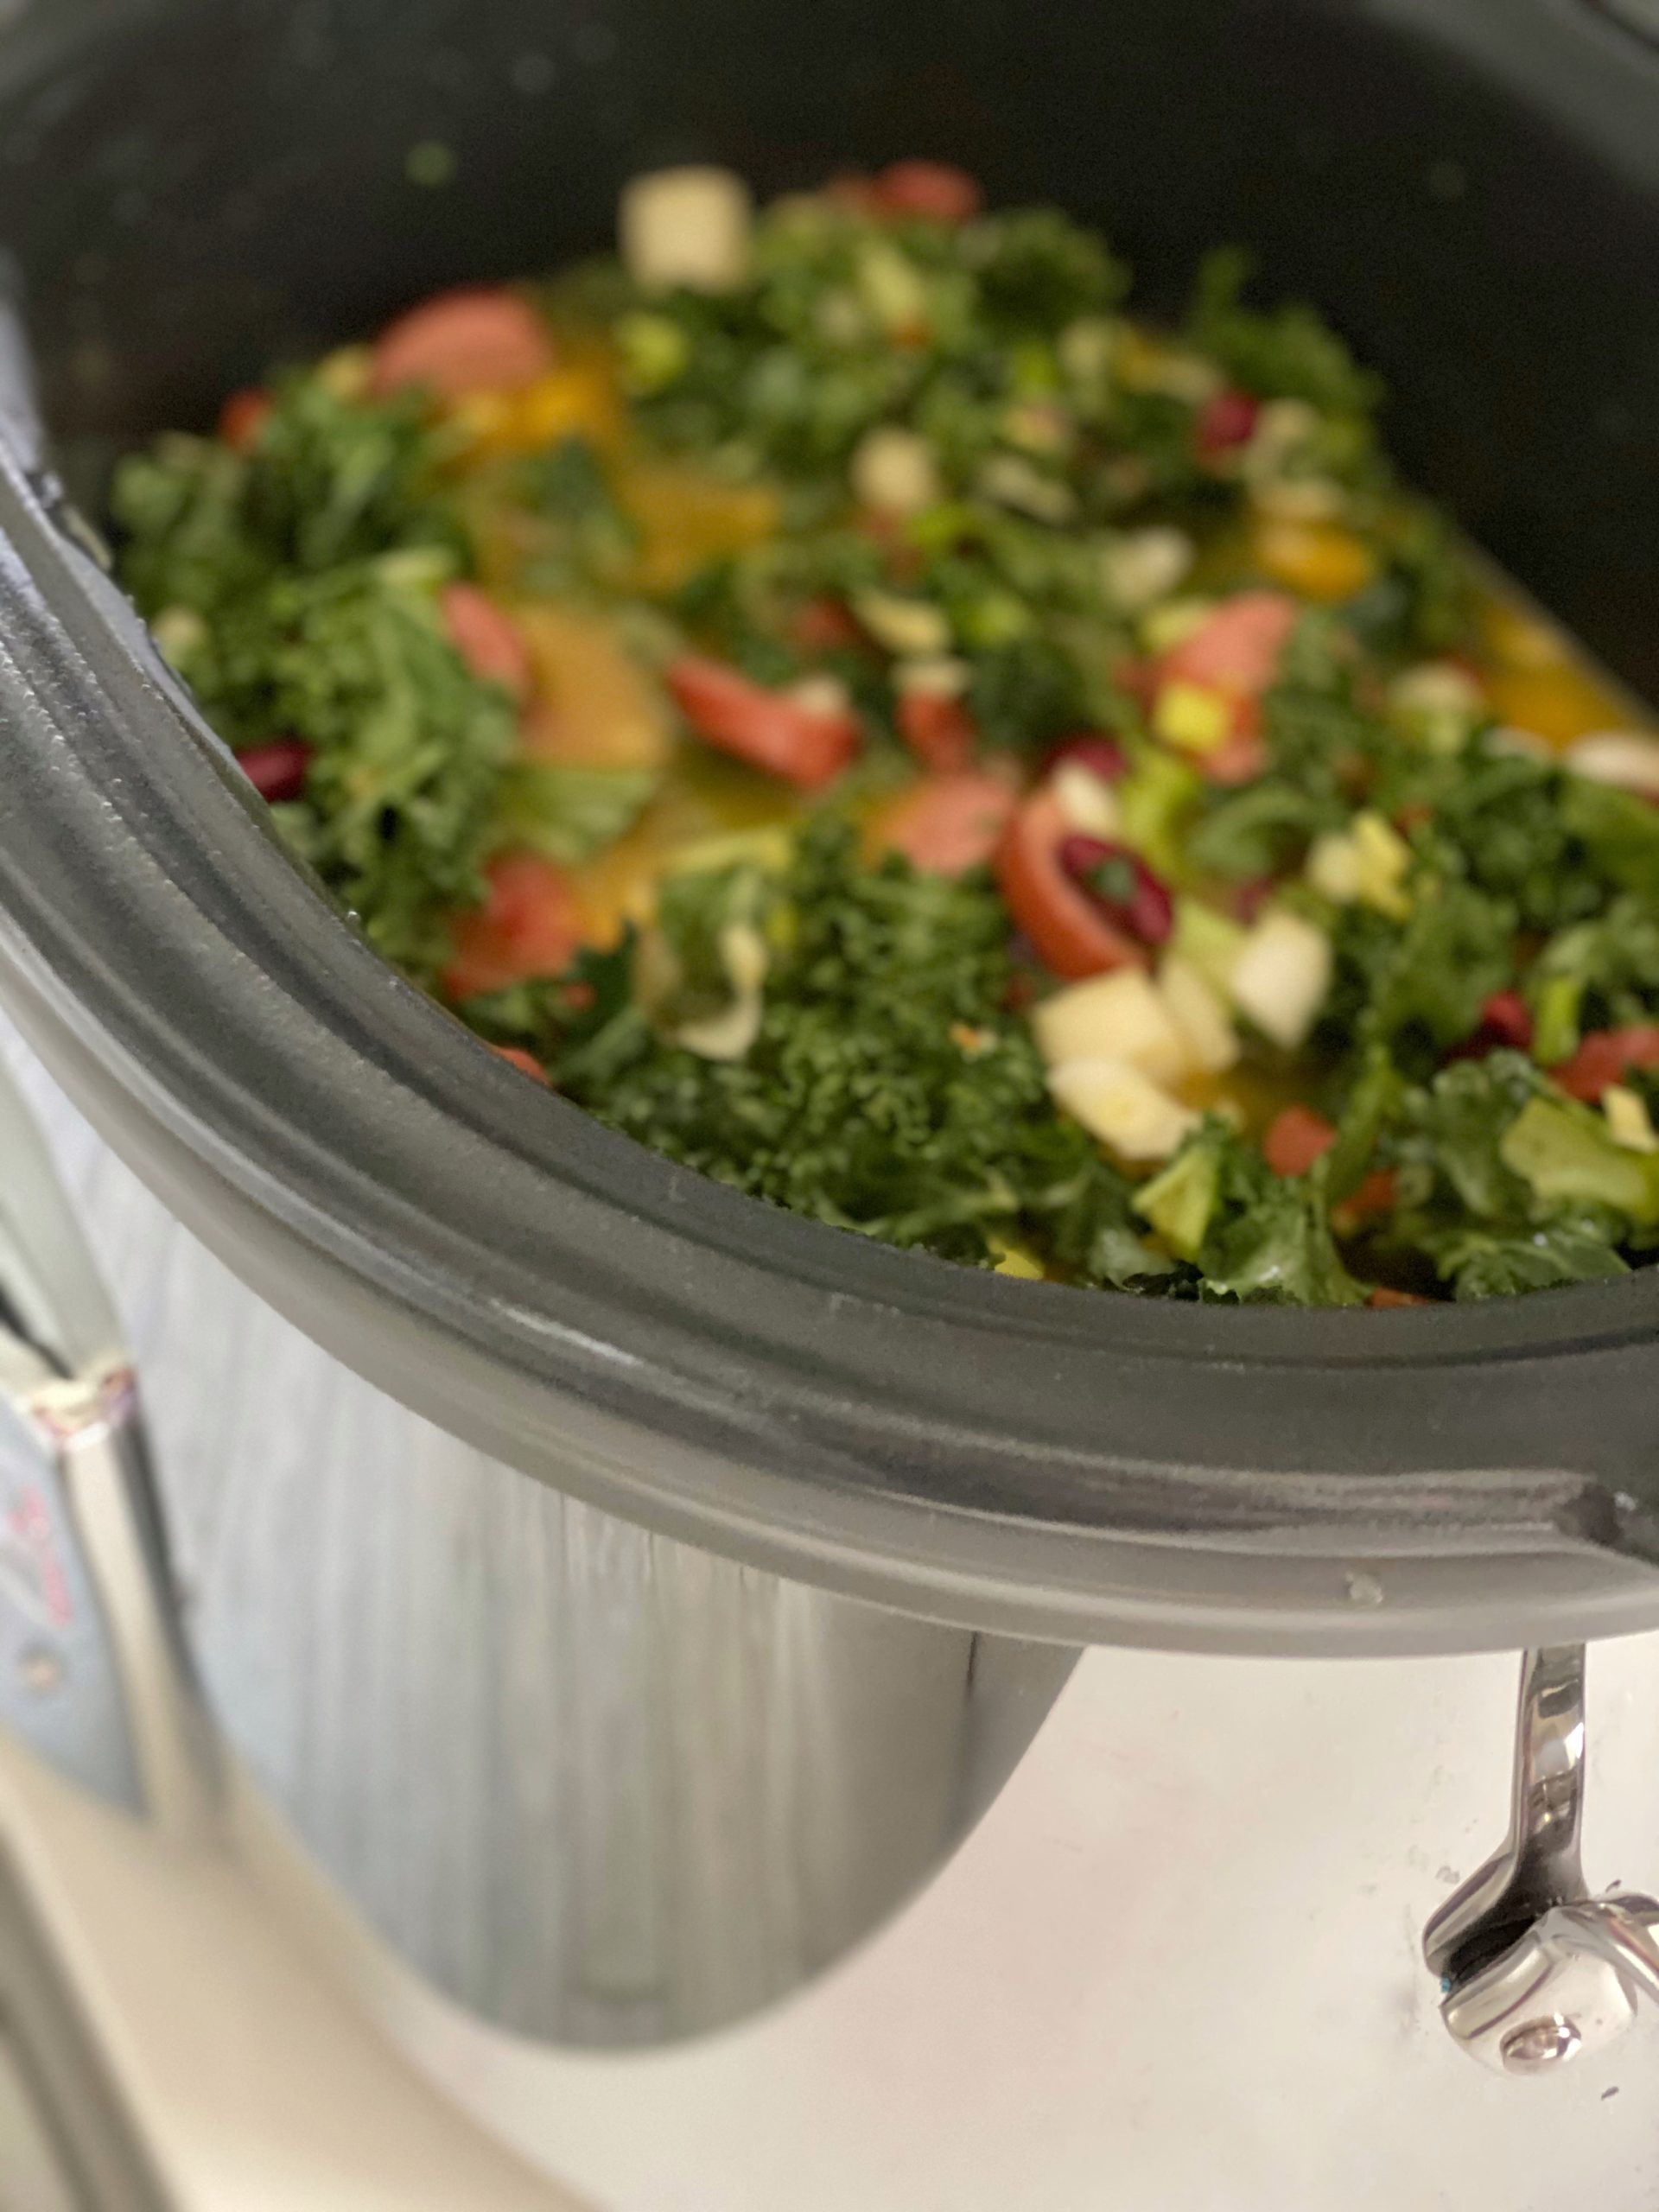 Healthy Crockpot Soup – Kielbasa & Veggies